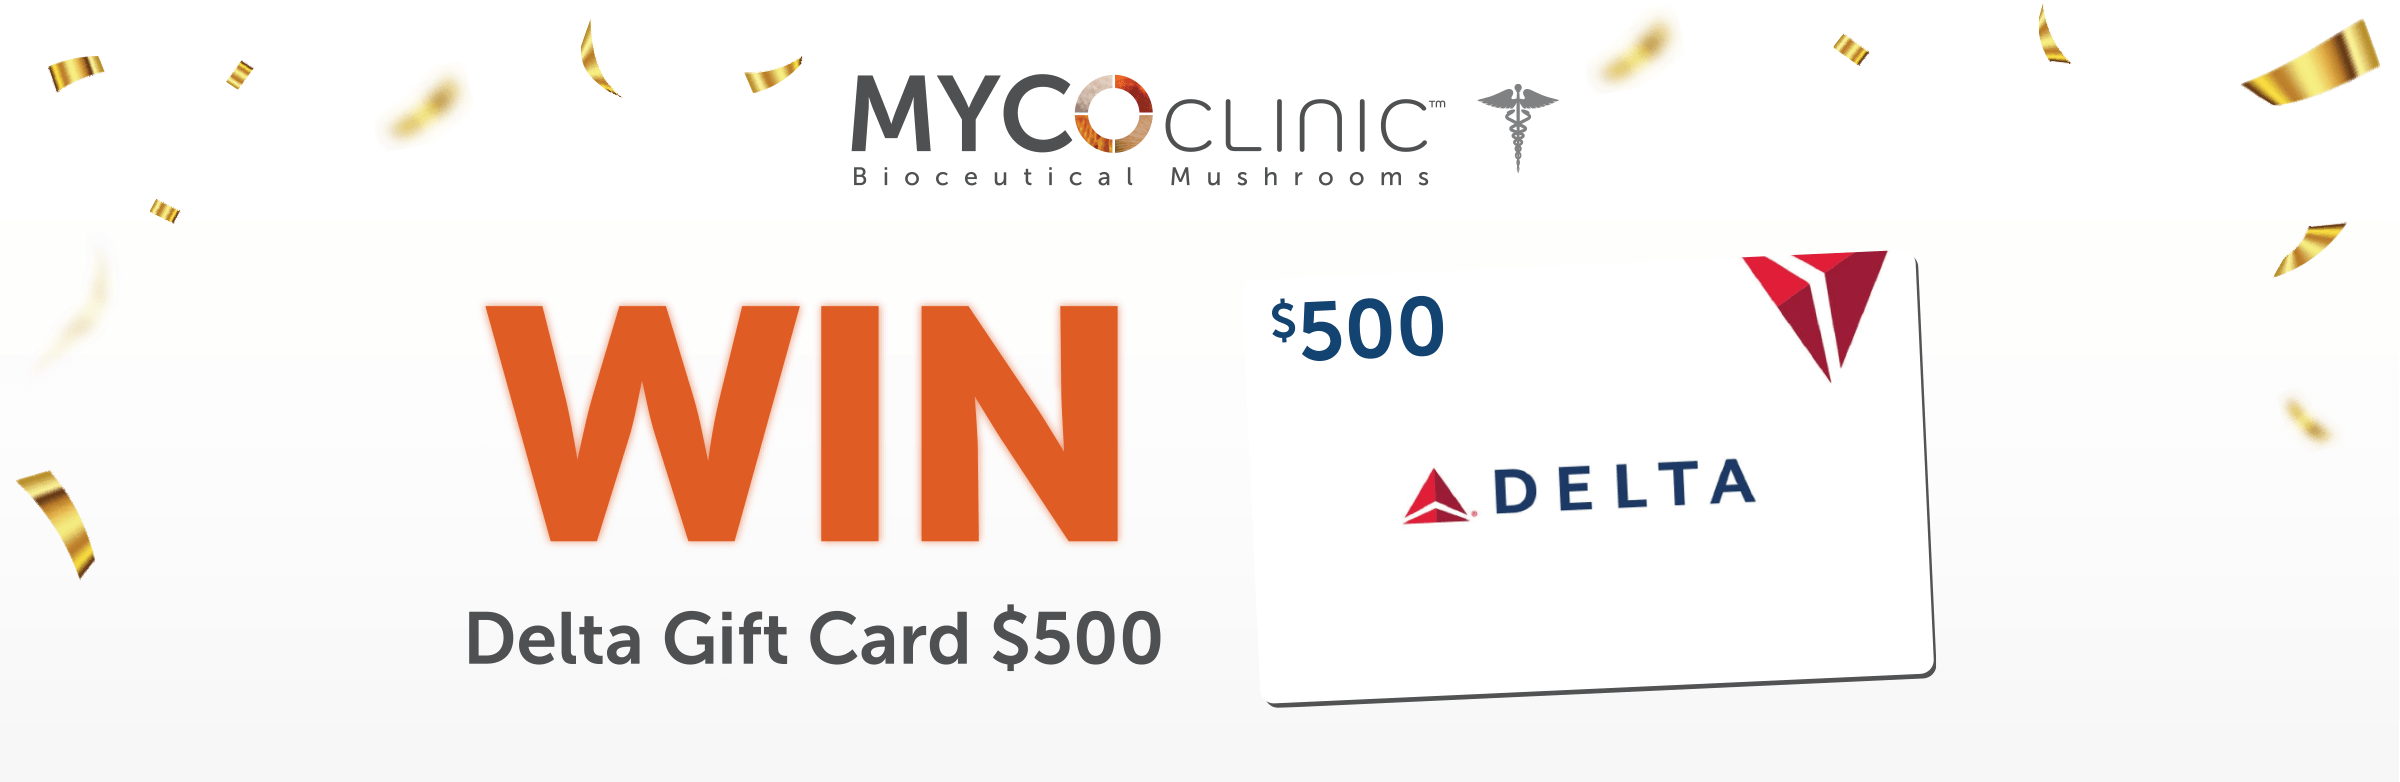 Win a $500 Delta Gift Card